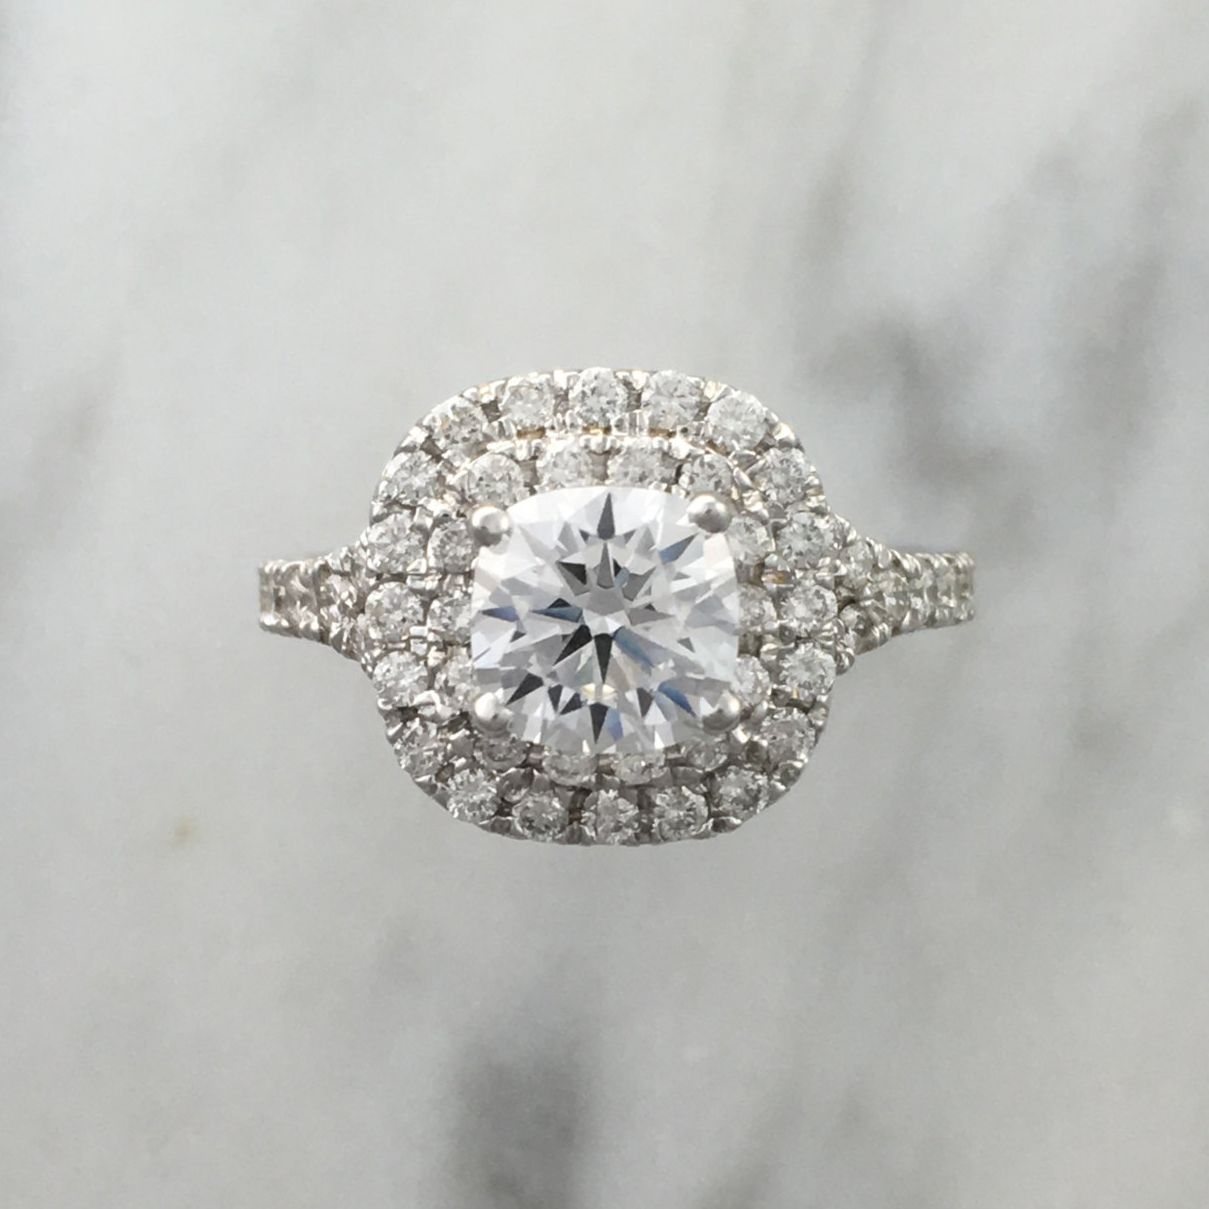 joanna gaines engagement ring - double cushion platinum diamond engagement ring